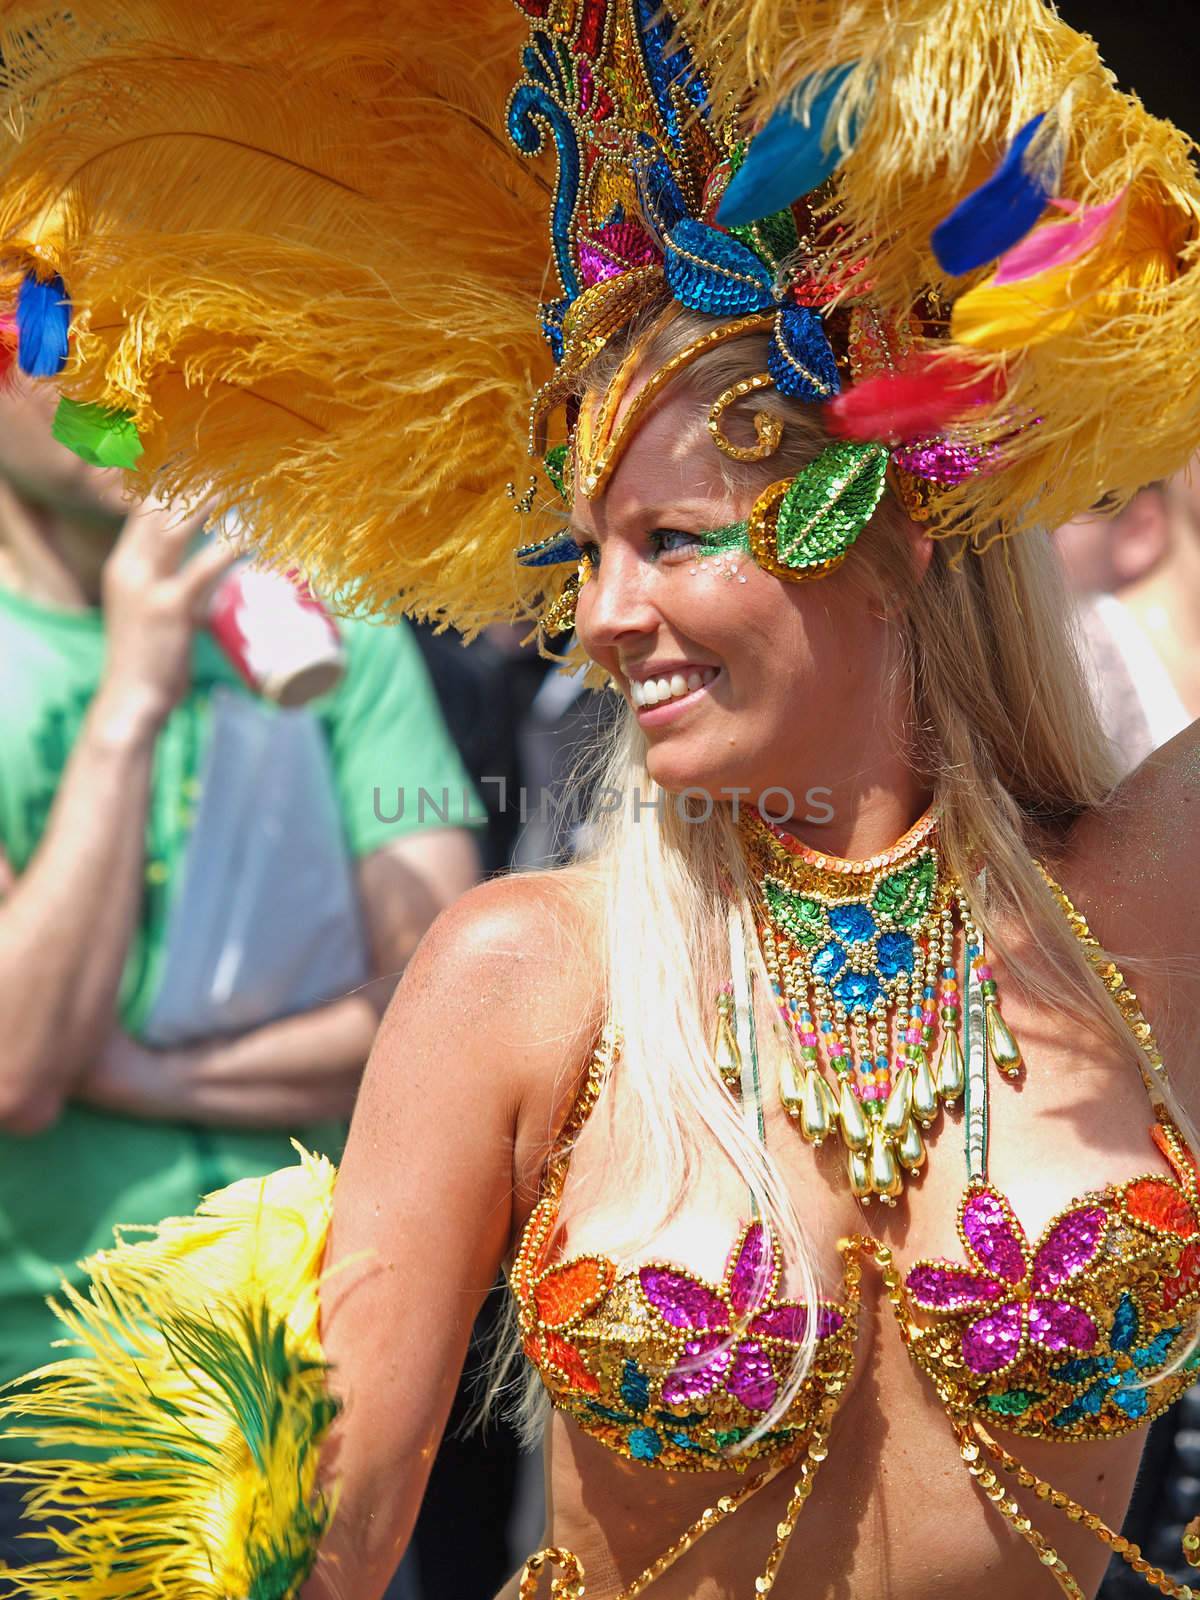 
COPENHAGEN - JUNE 11: Participant in the 29th annual Copenhagen Carnival parade of fantastic costumes, samba dancing and Latin styles starts on June 10 - 12, 2011 in Copenhagen, Denmark.
